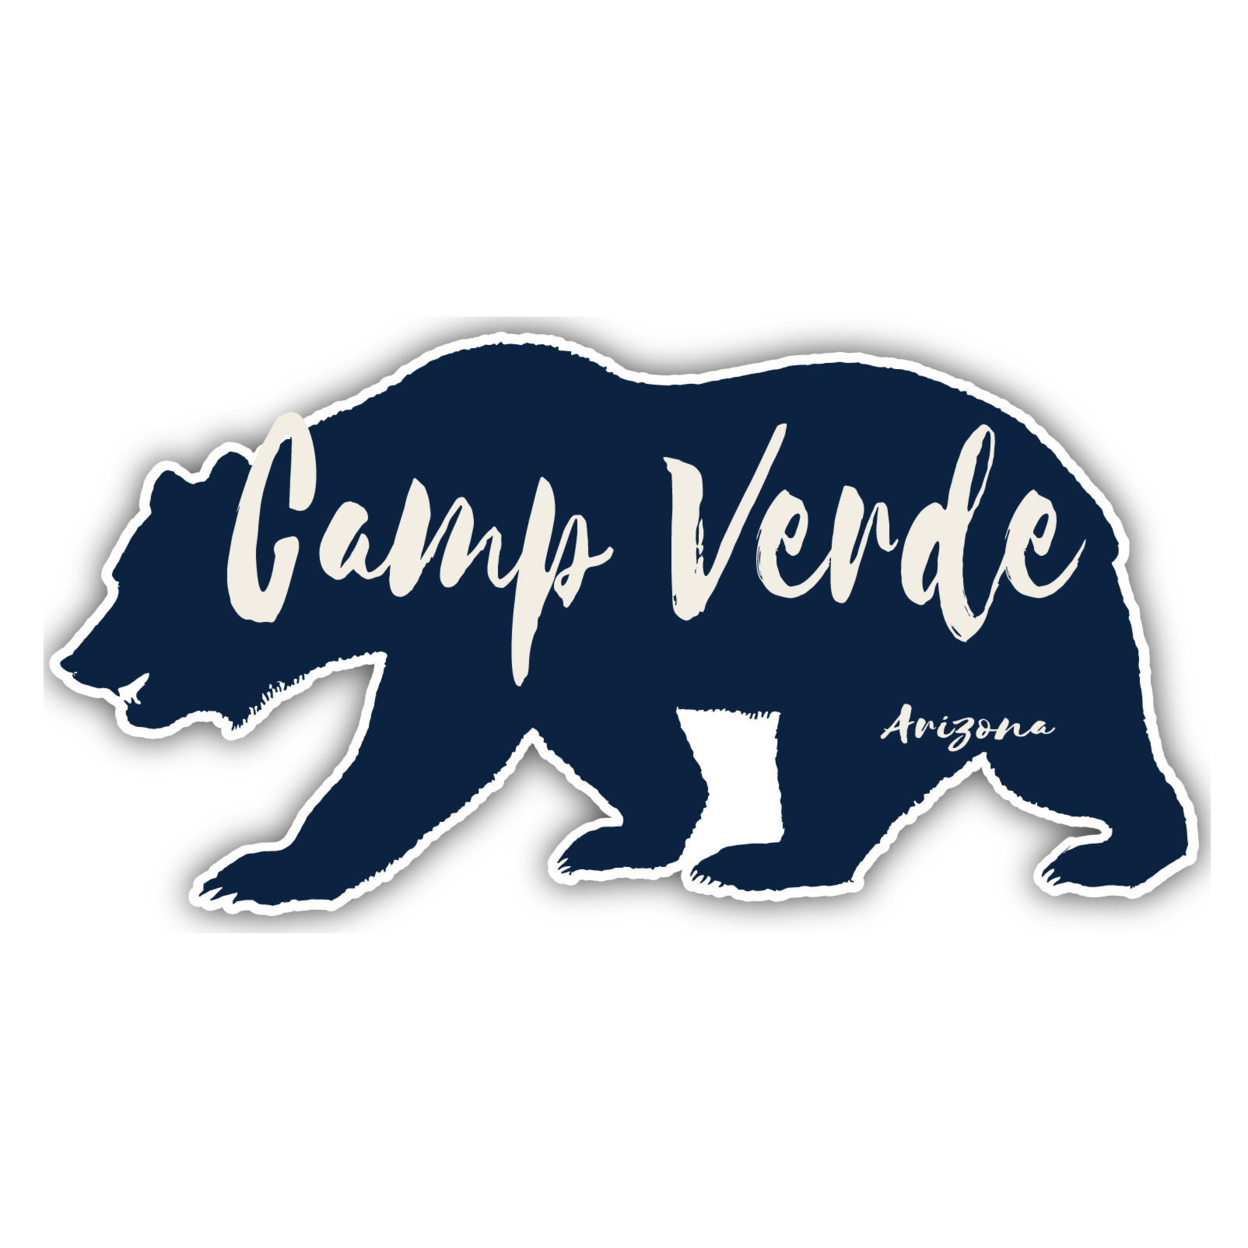 Camp Verde Arizona Souvenir Decorative Stickers (Choose Theme And Size) - 4-Pack, 10-Inch, Camp Life